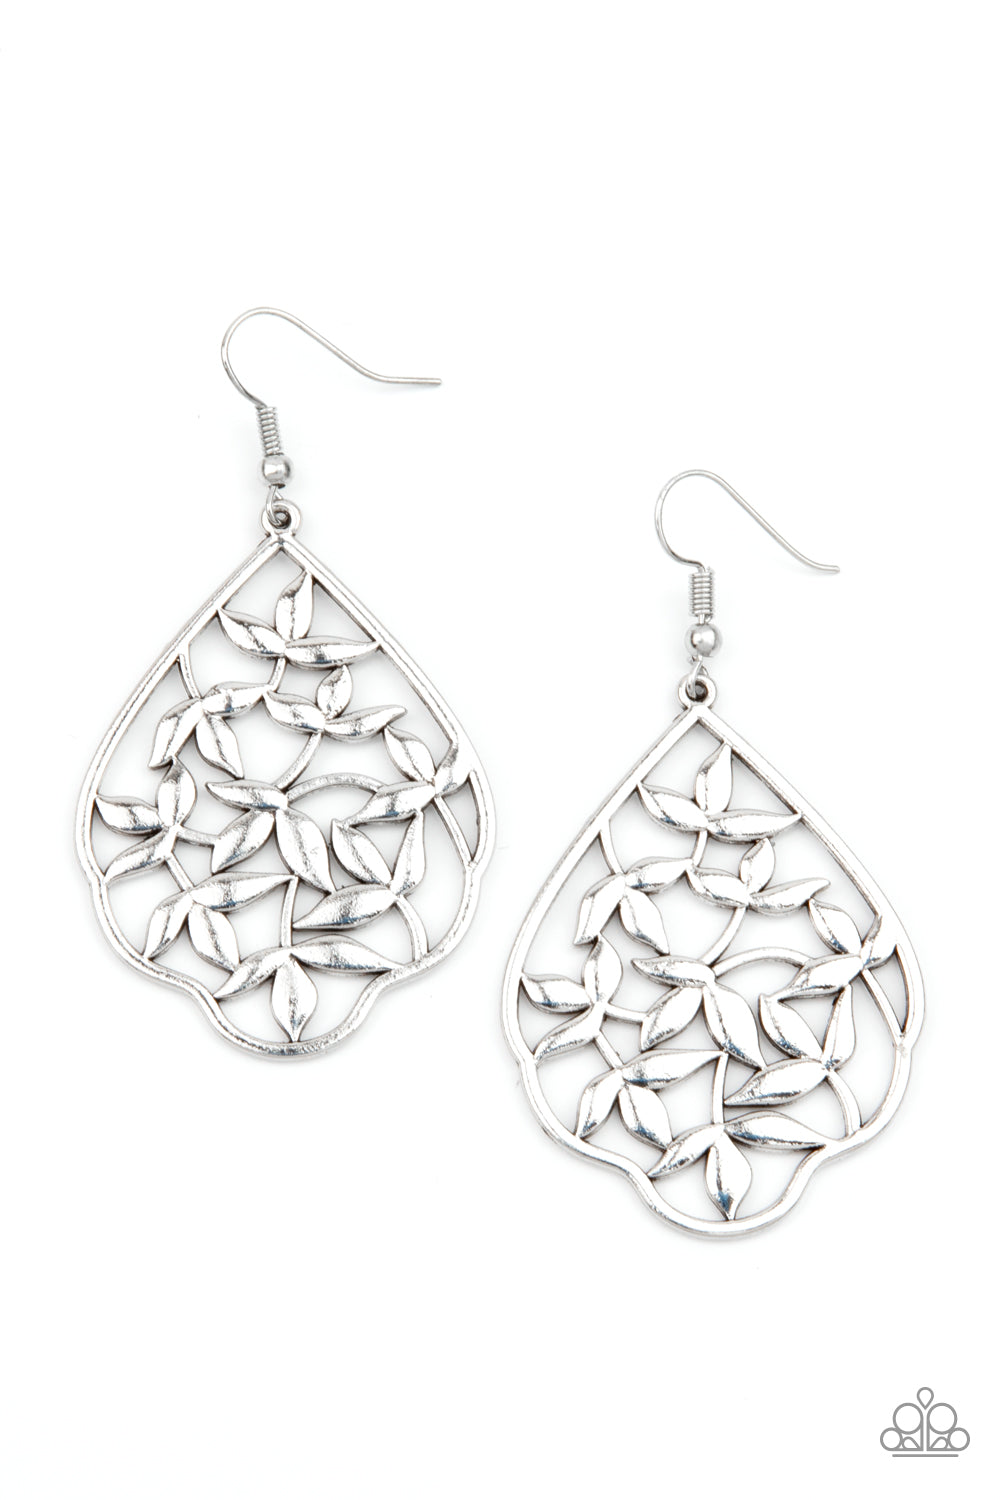 Taj Mahal Gardens - Silver Earrings - Princess Glam Shop